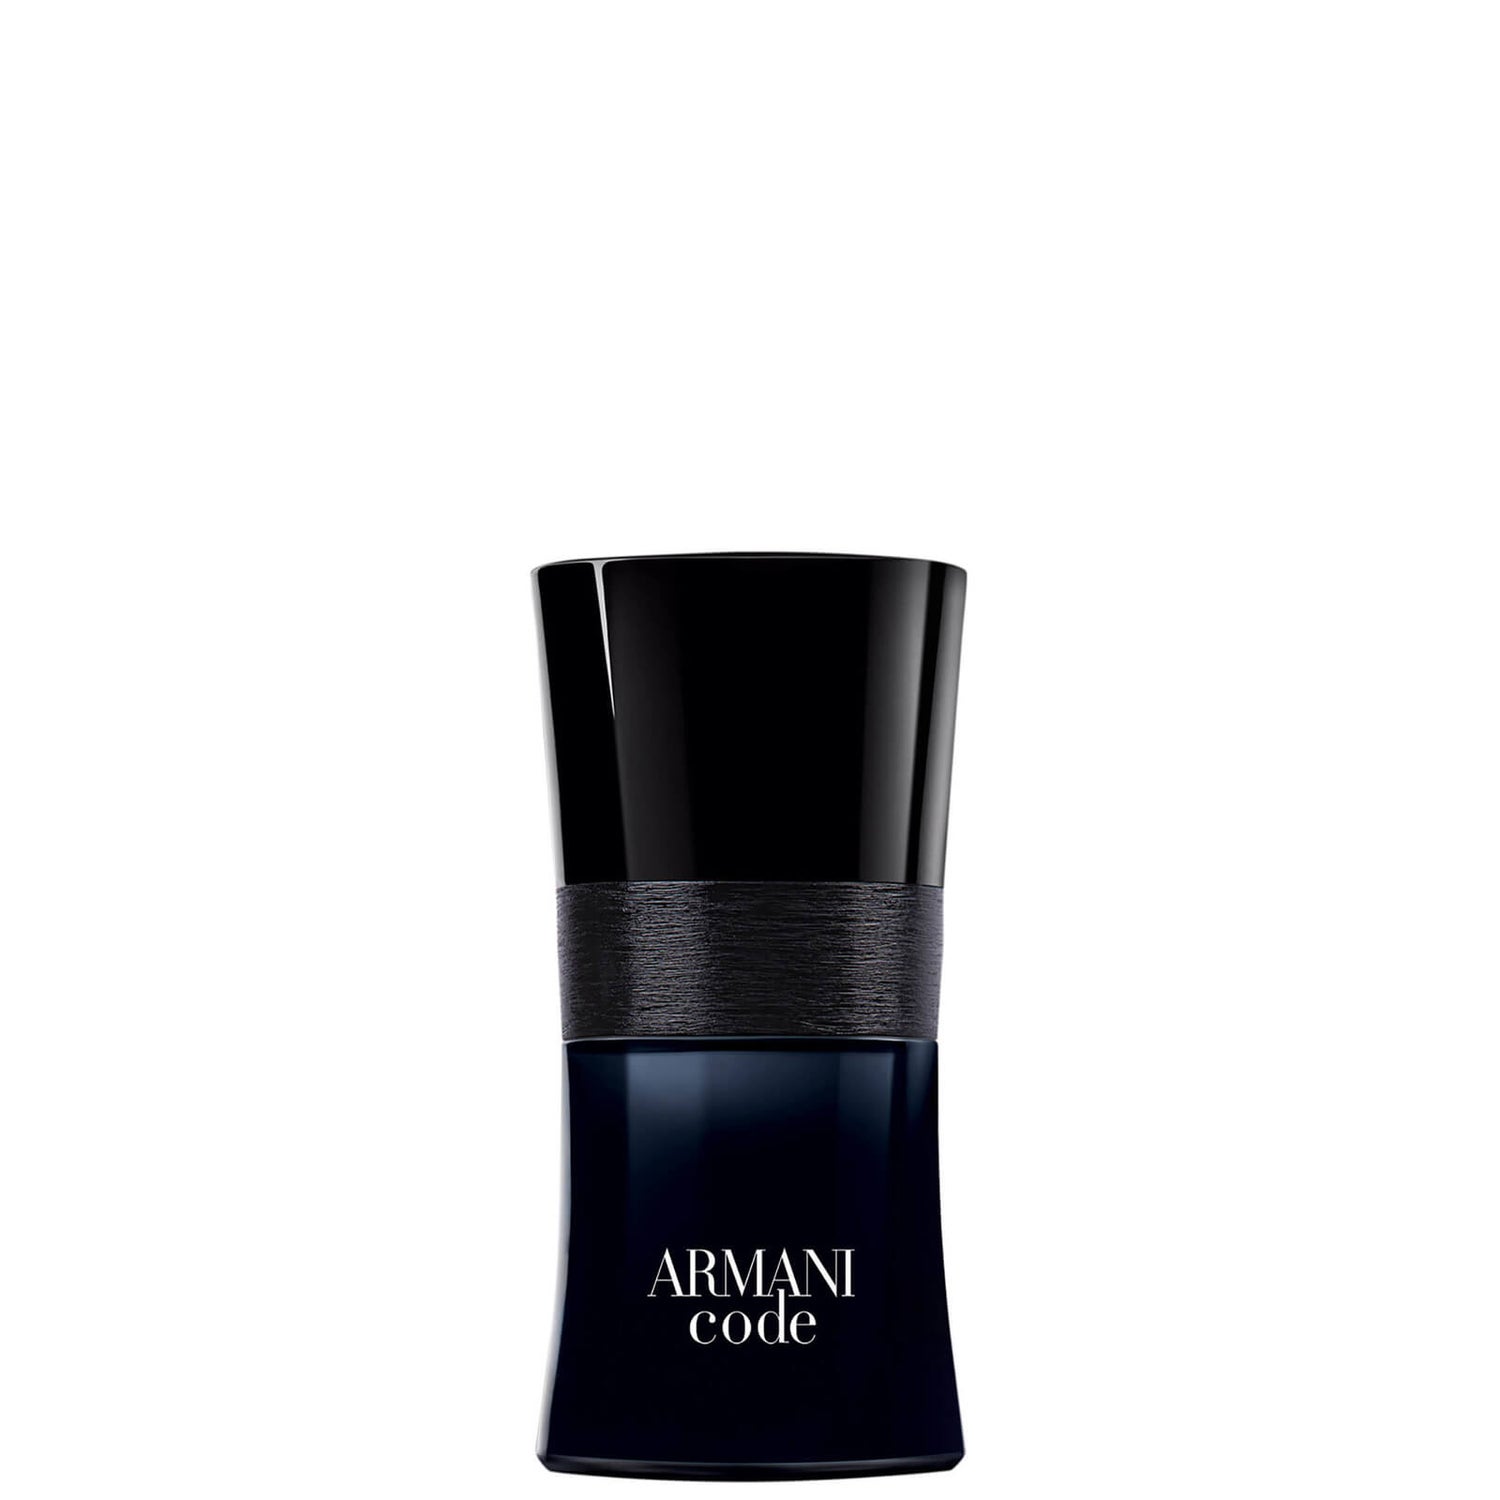 Armani Code Eau de Toilette - 30ml Armani Code toaletní voda - 30 ml